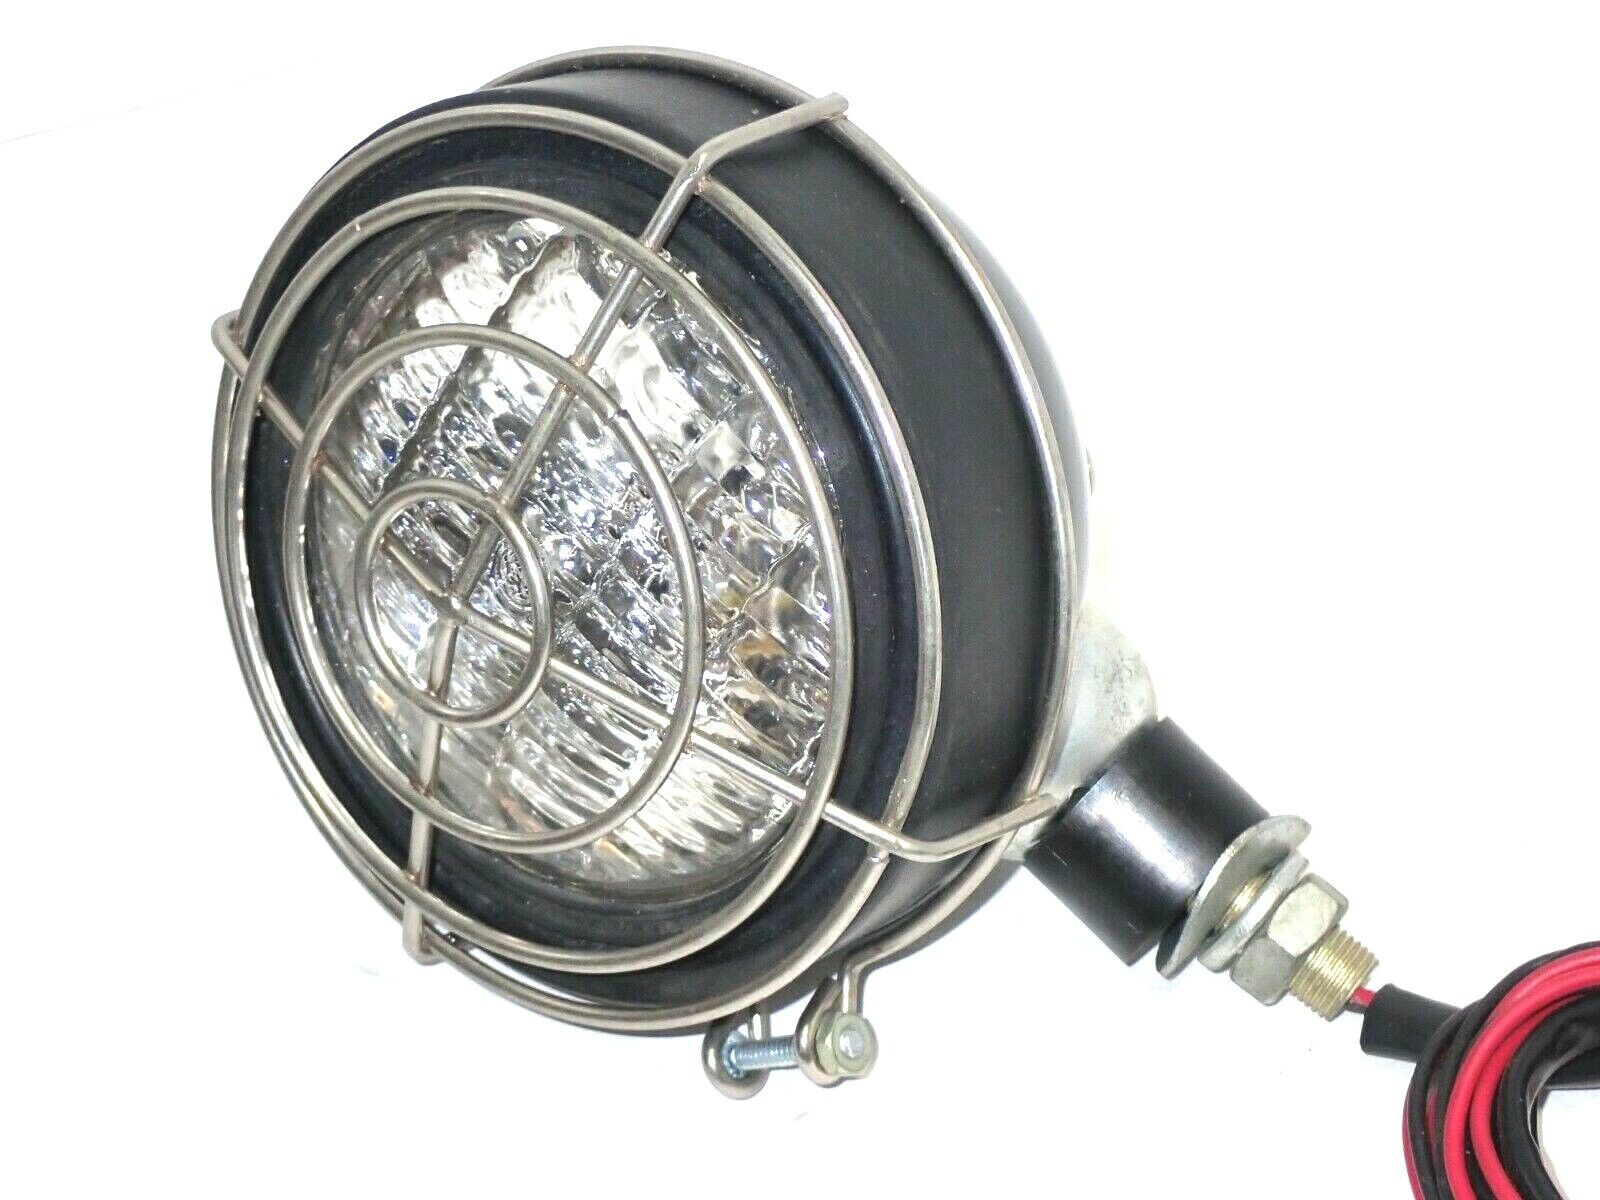 NOS NEW Vintage STEWART WARNER HEAD Lamp w/ Guard 48V 